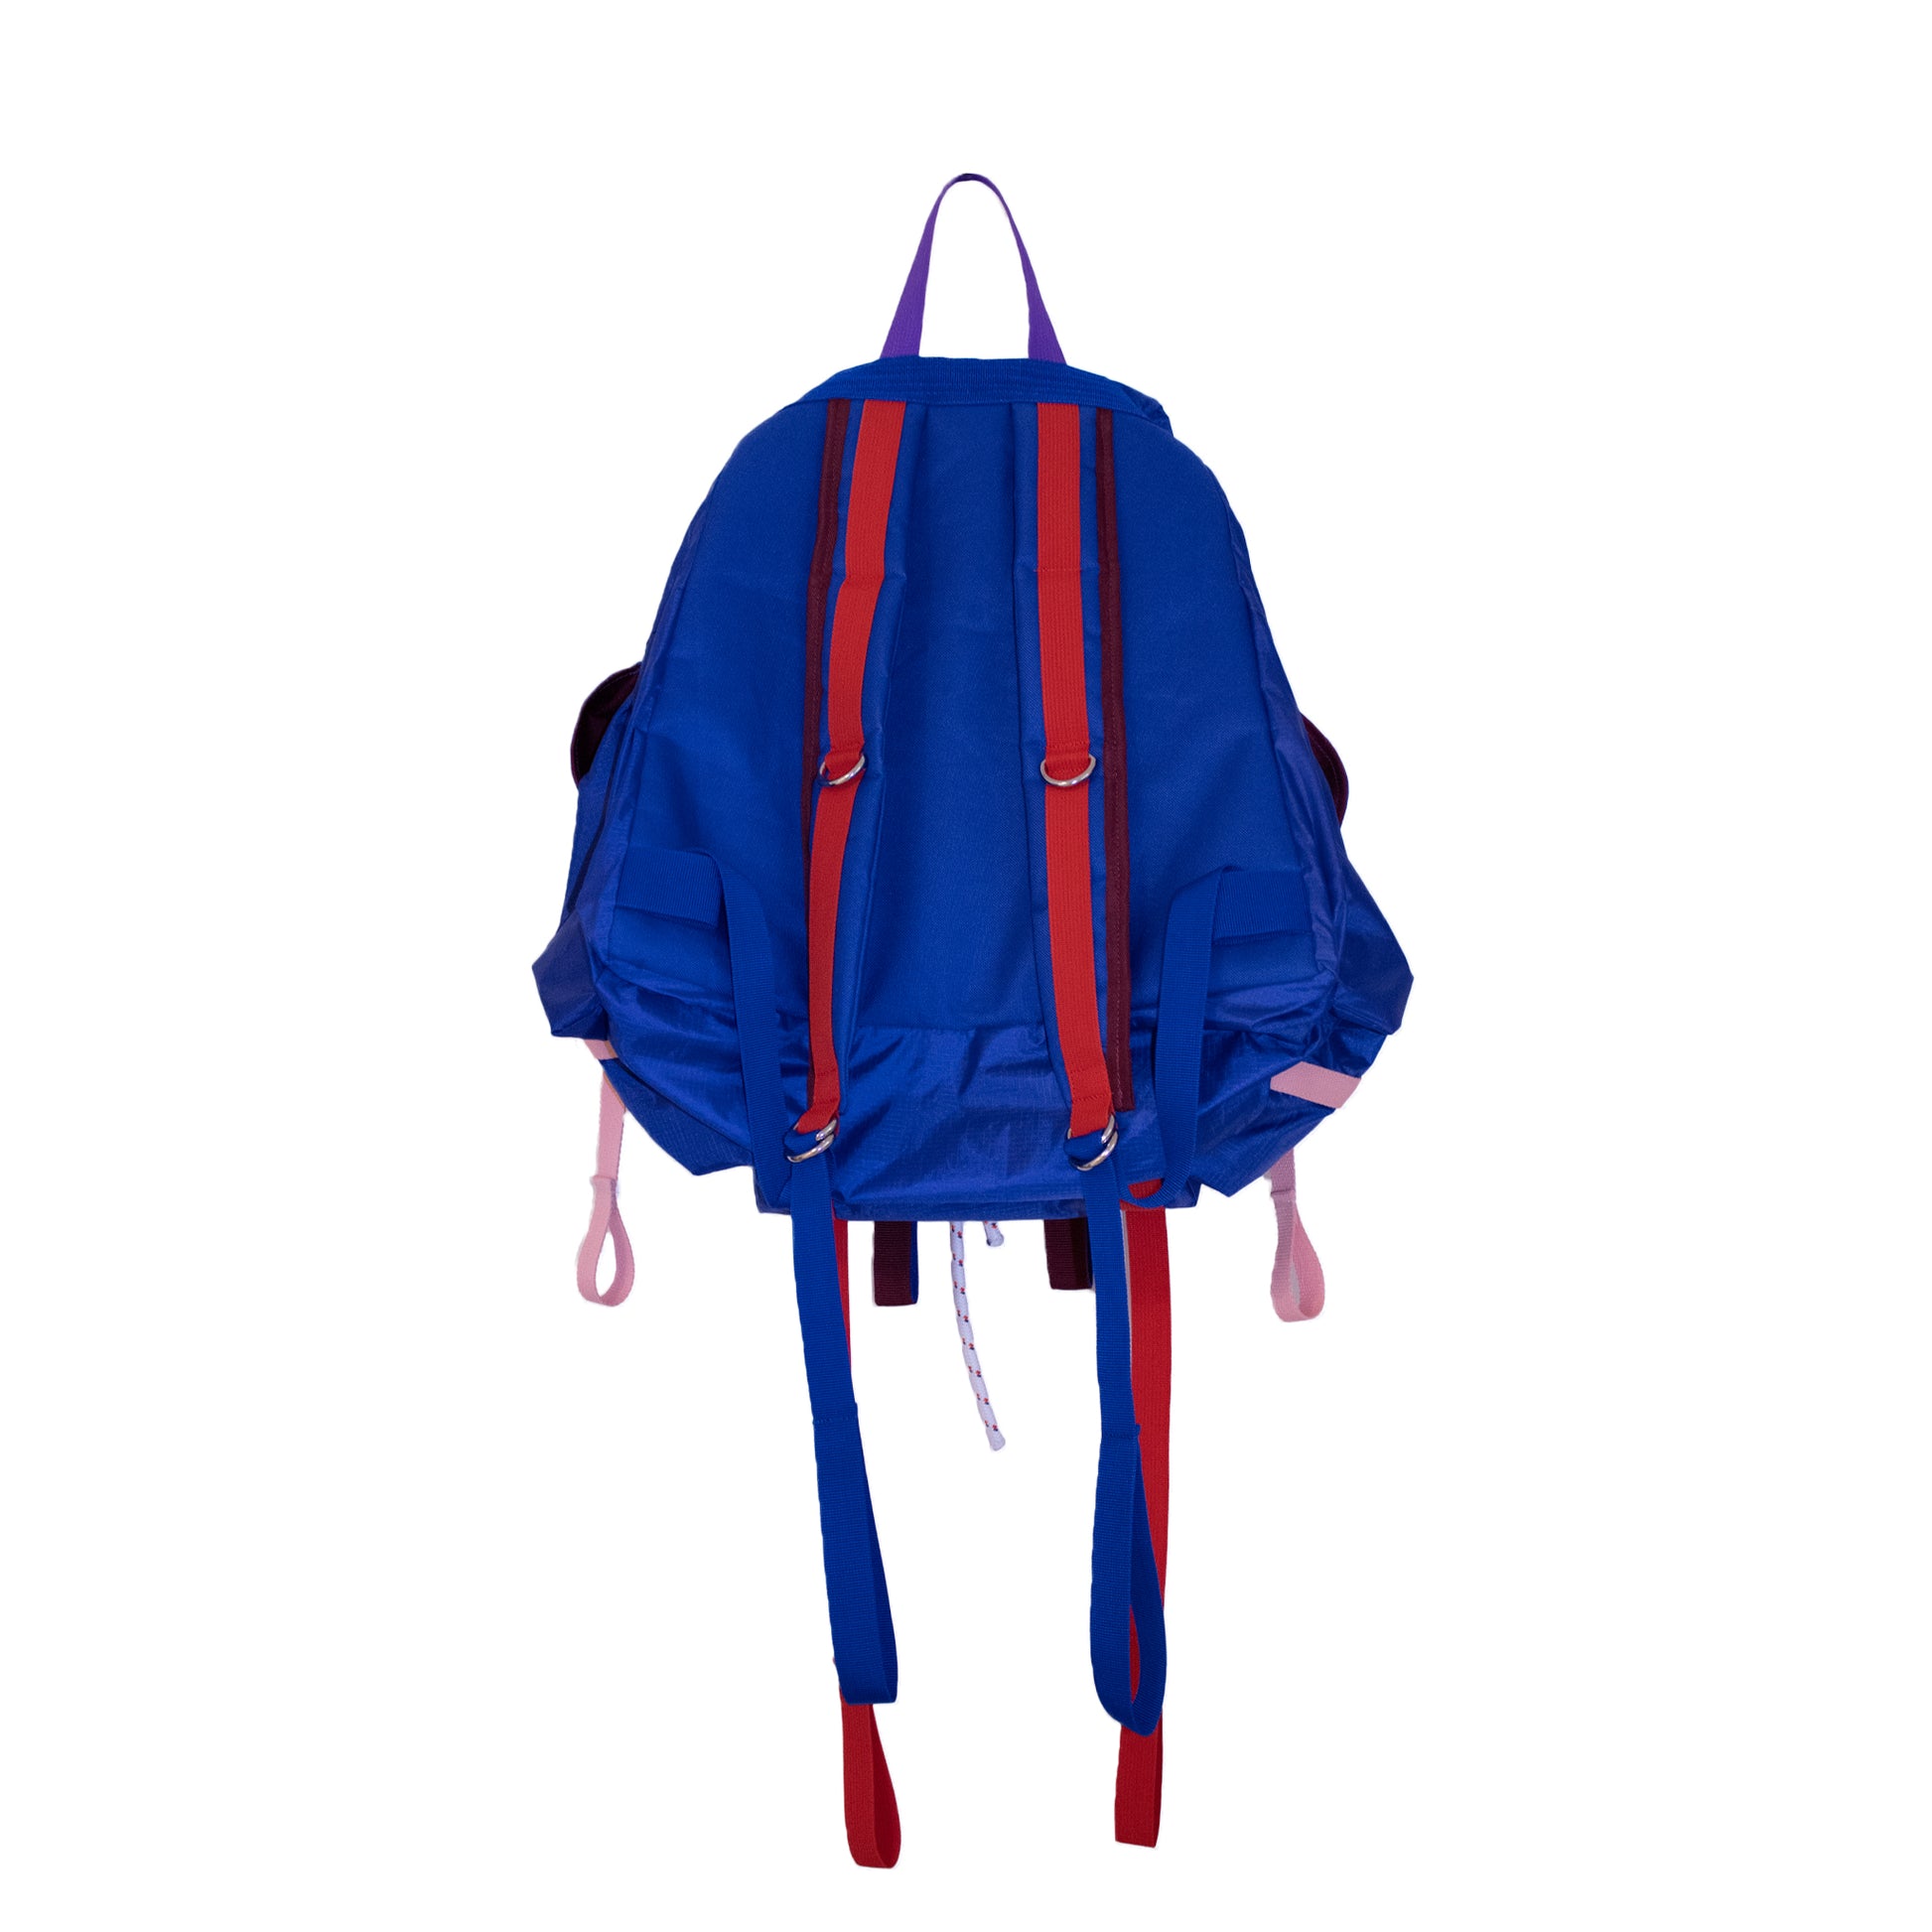 Nexus Oversized Backpack In Light Weight Royal Blue Ripstop - Uriel Studio